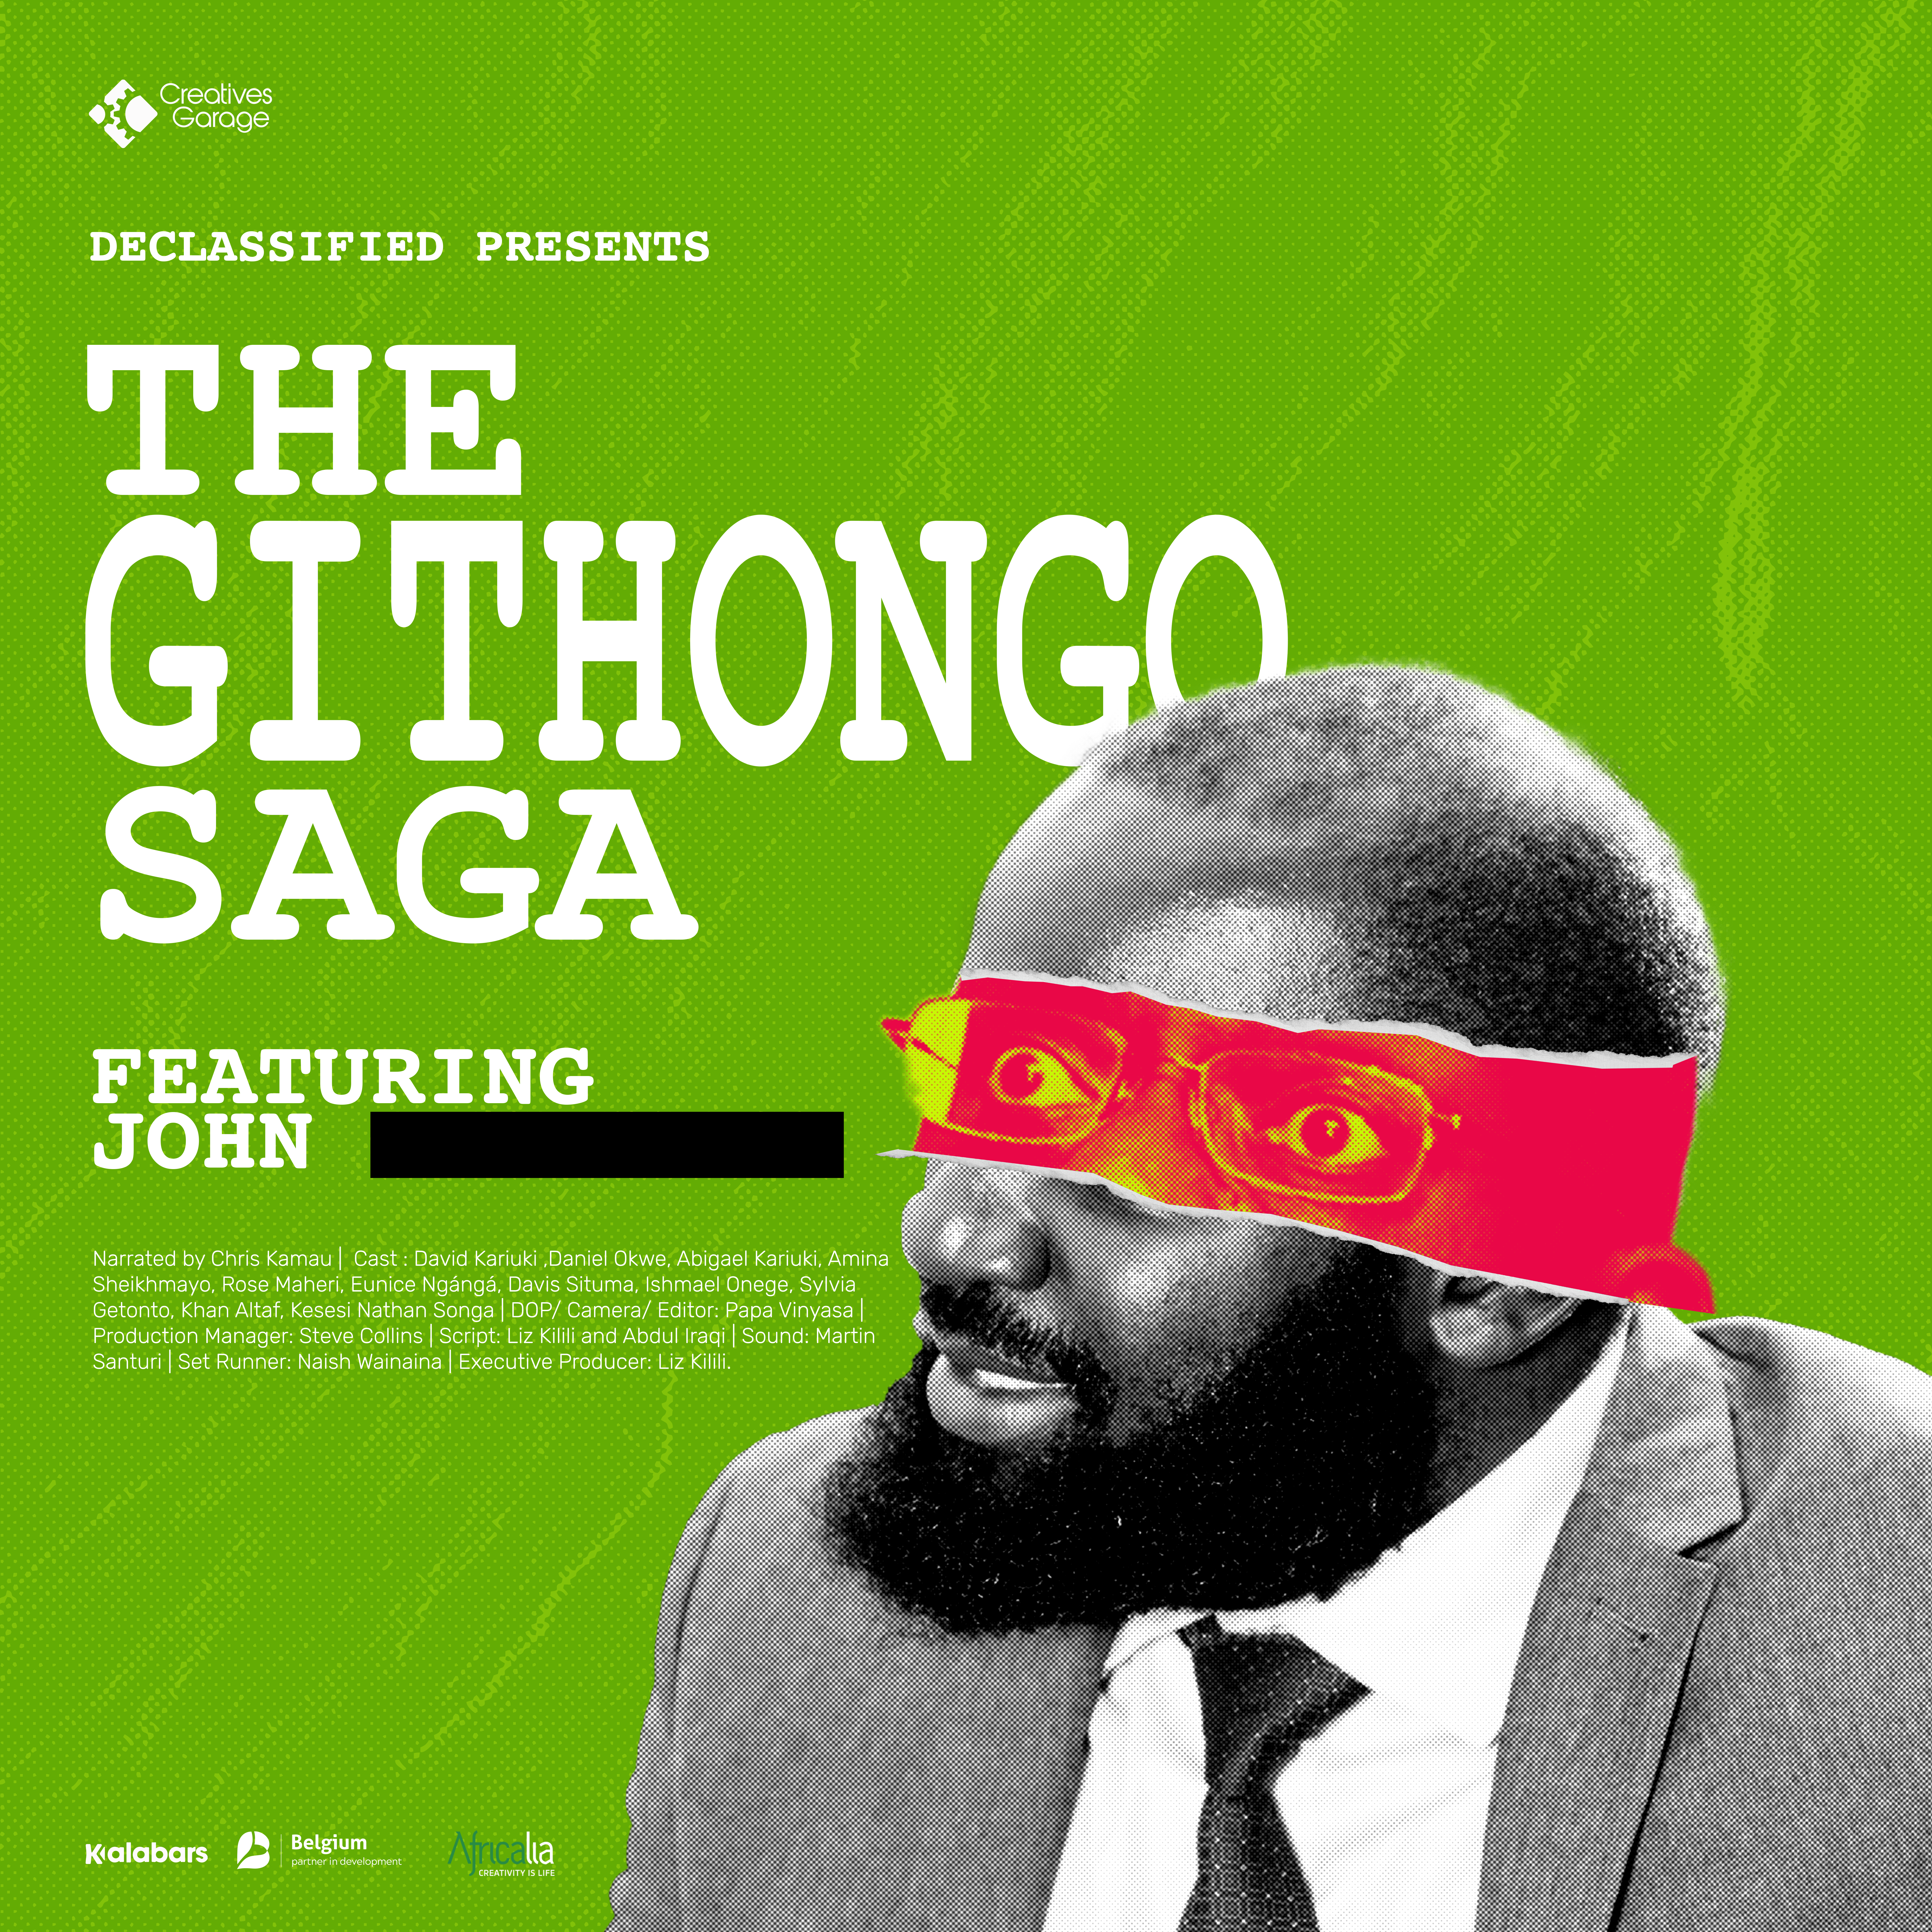 The John Githongo Saga